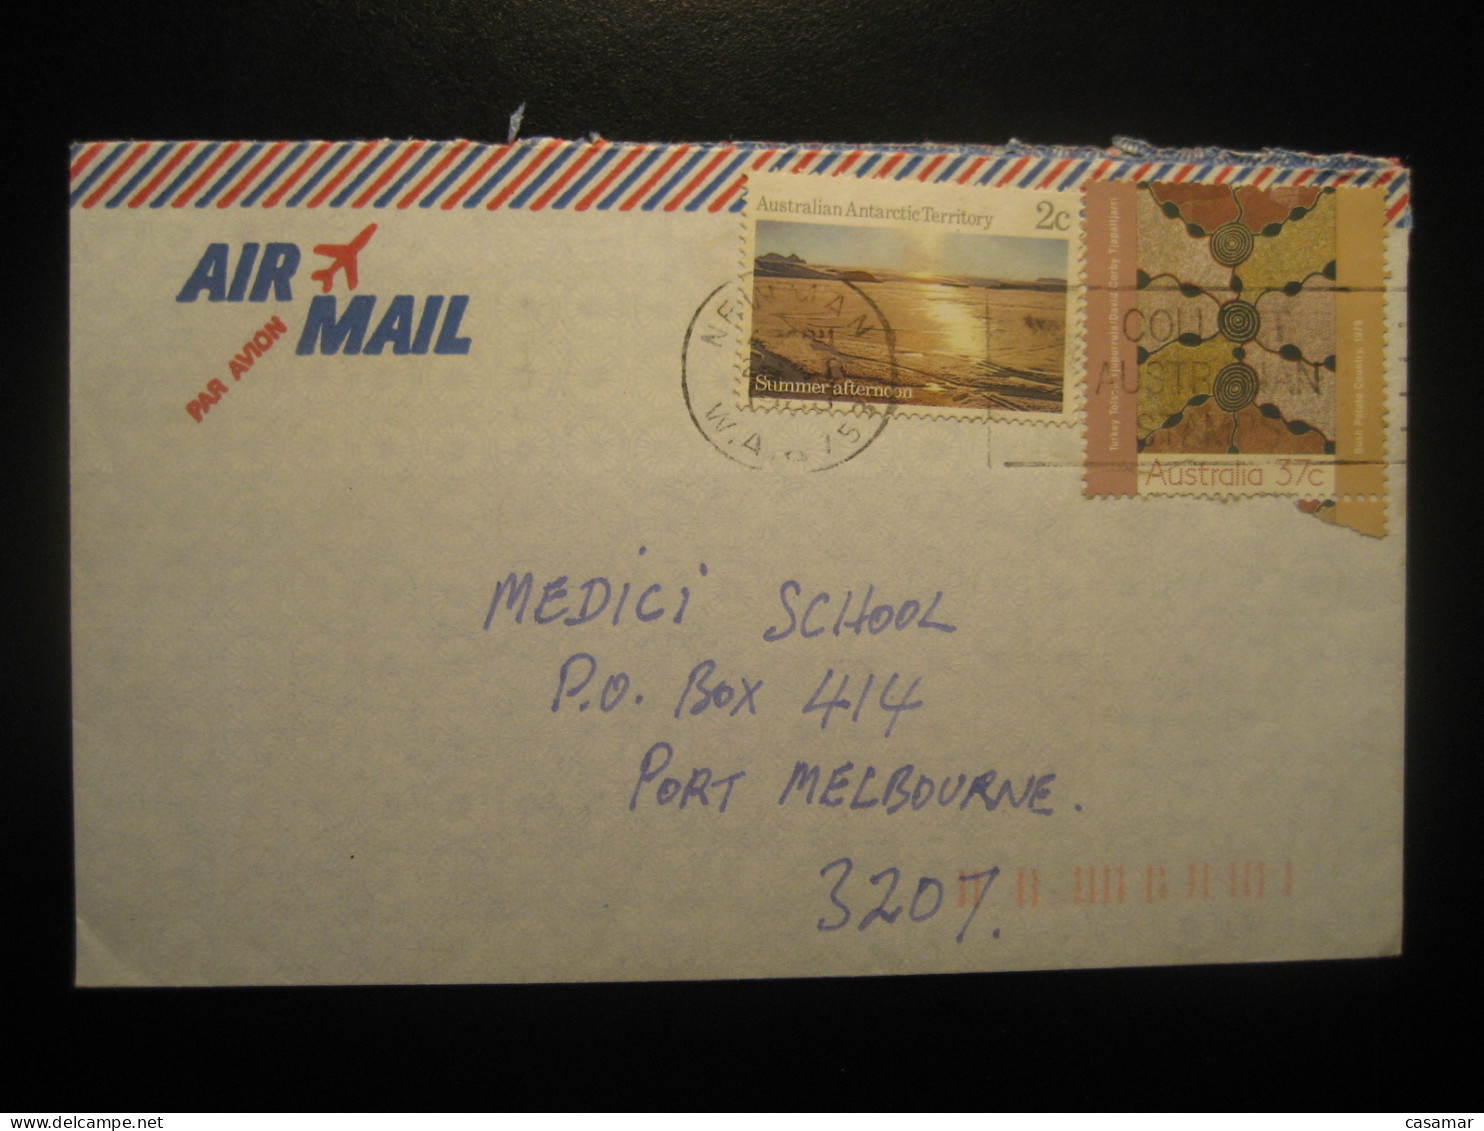 NEWMAN 198? Summer Afternoon Cancel Air Mail Cover AAT Australian Antarctic Territory Antarctics Antarctica - Briefe U. Dokumente